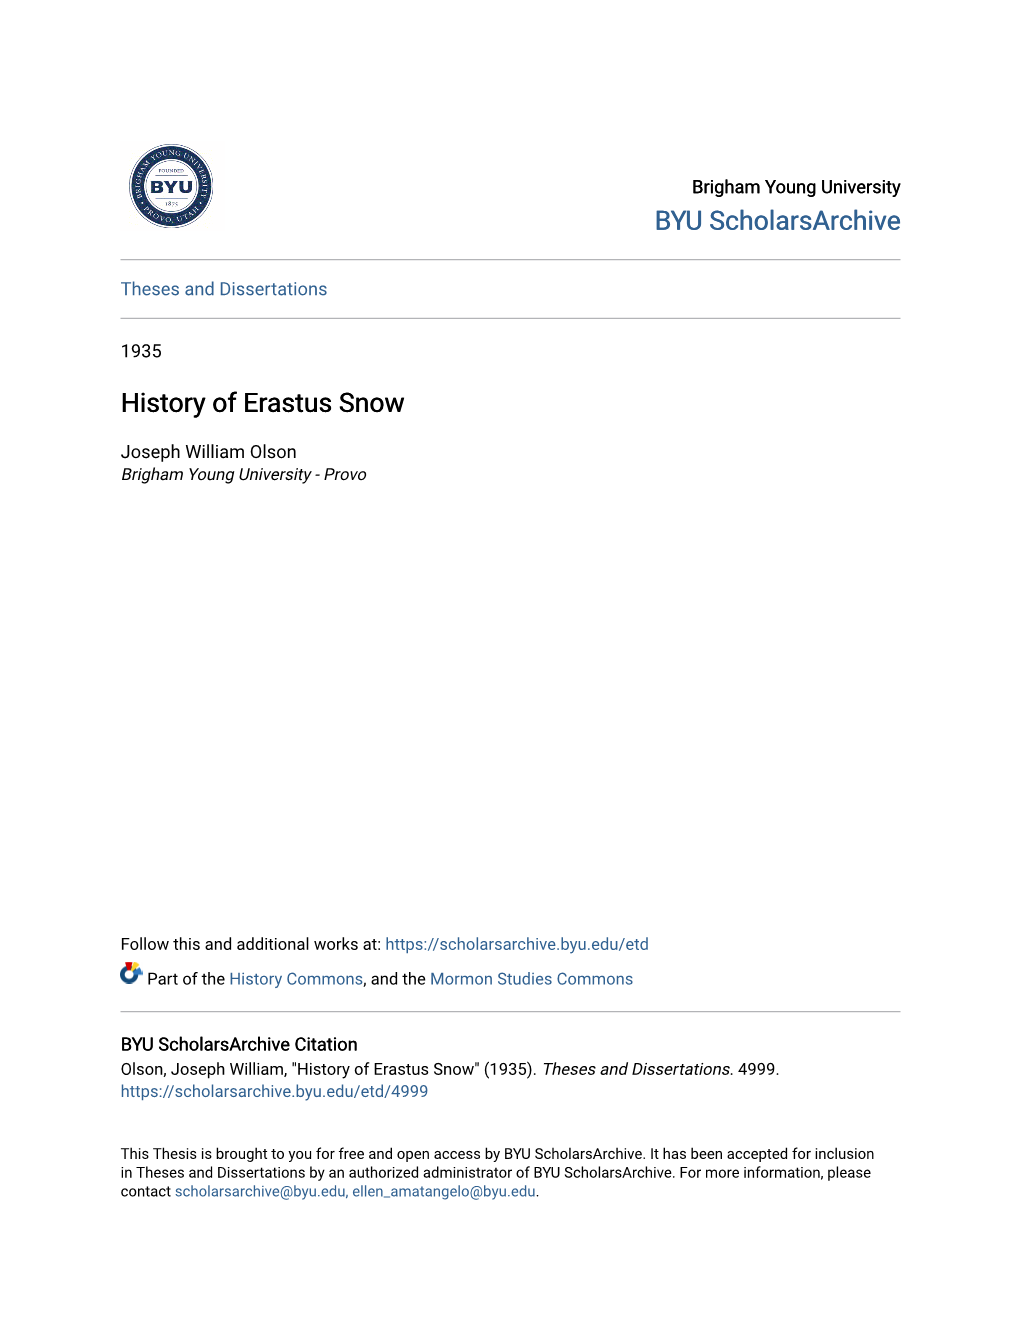 History of Erastus Snow